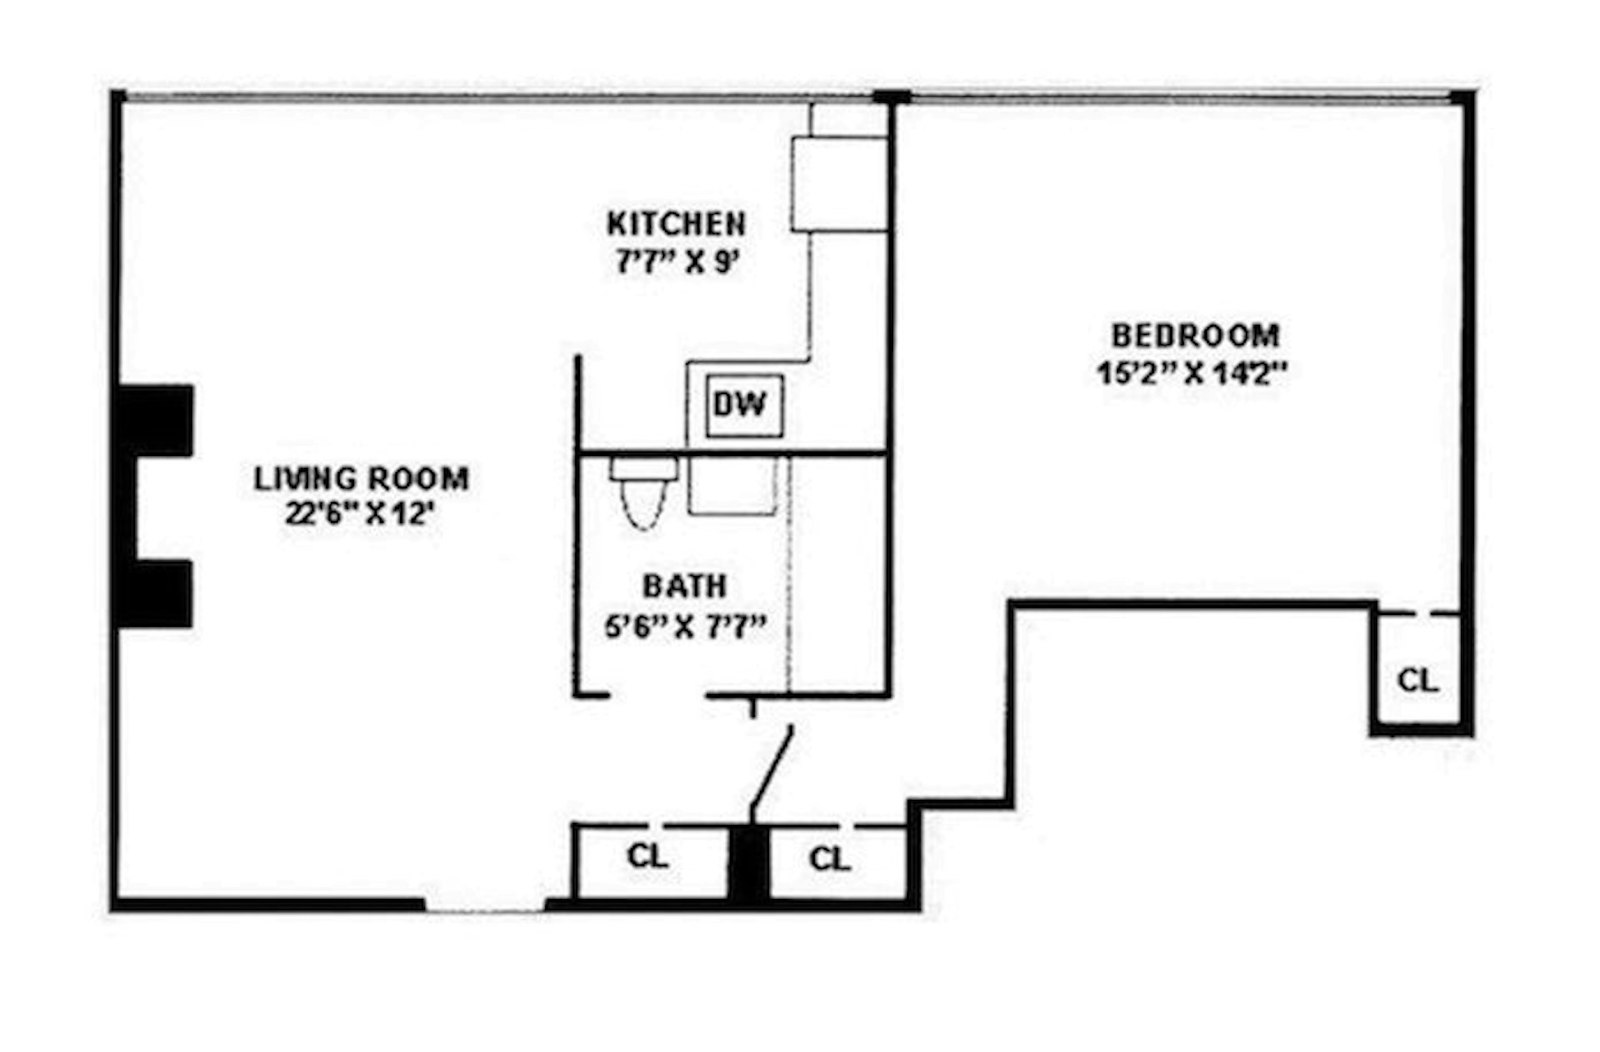 Floorplan for 300 East 90th Street, 9B